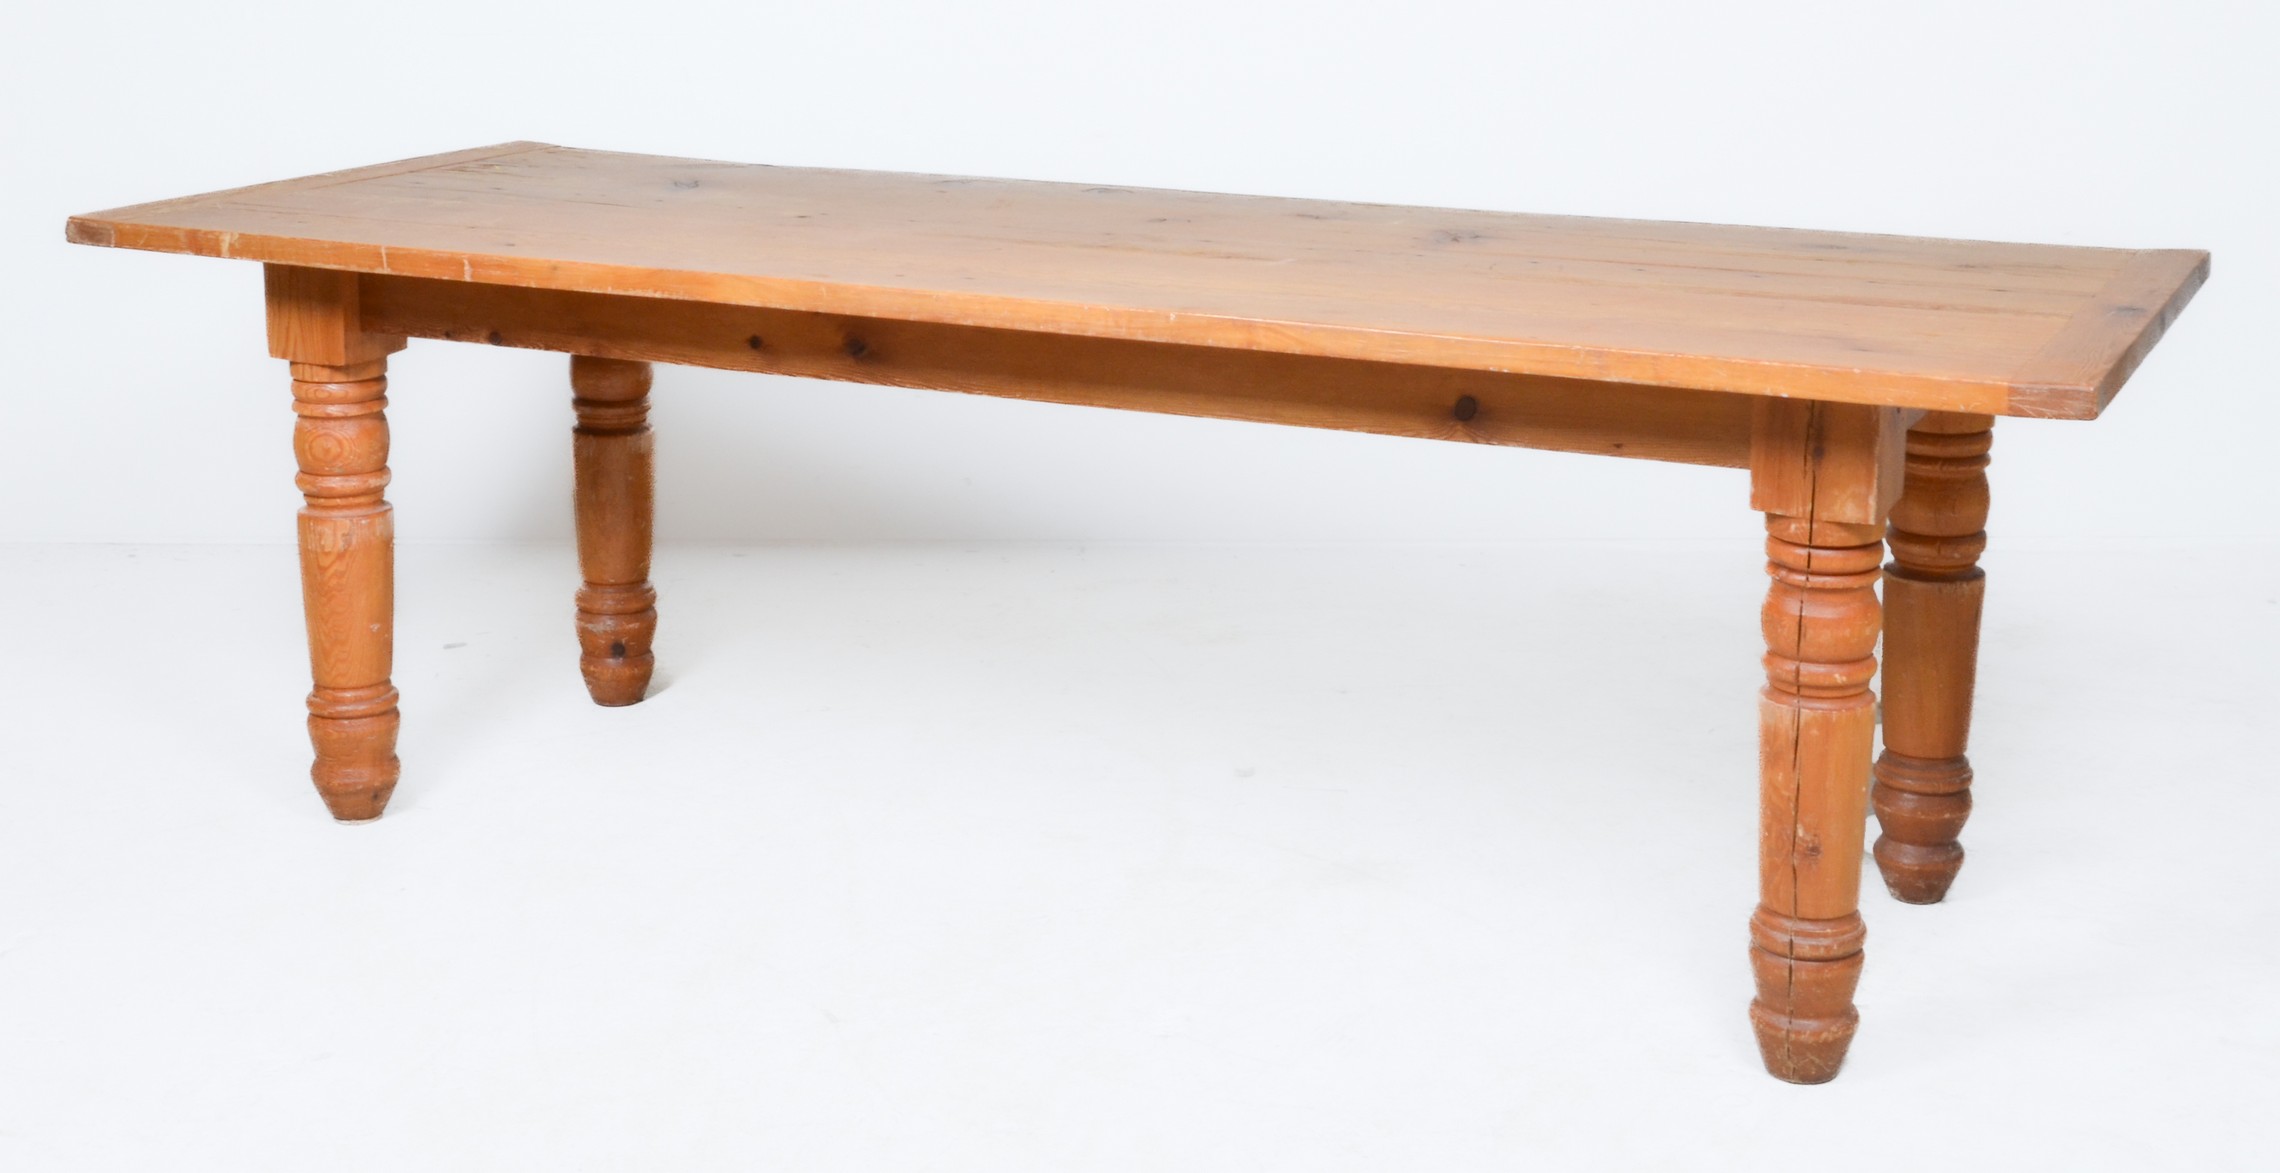 Pine Farm table top with breadboard 3b6826